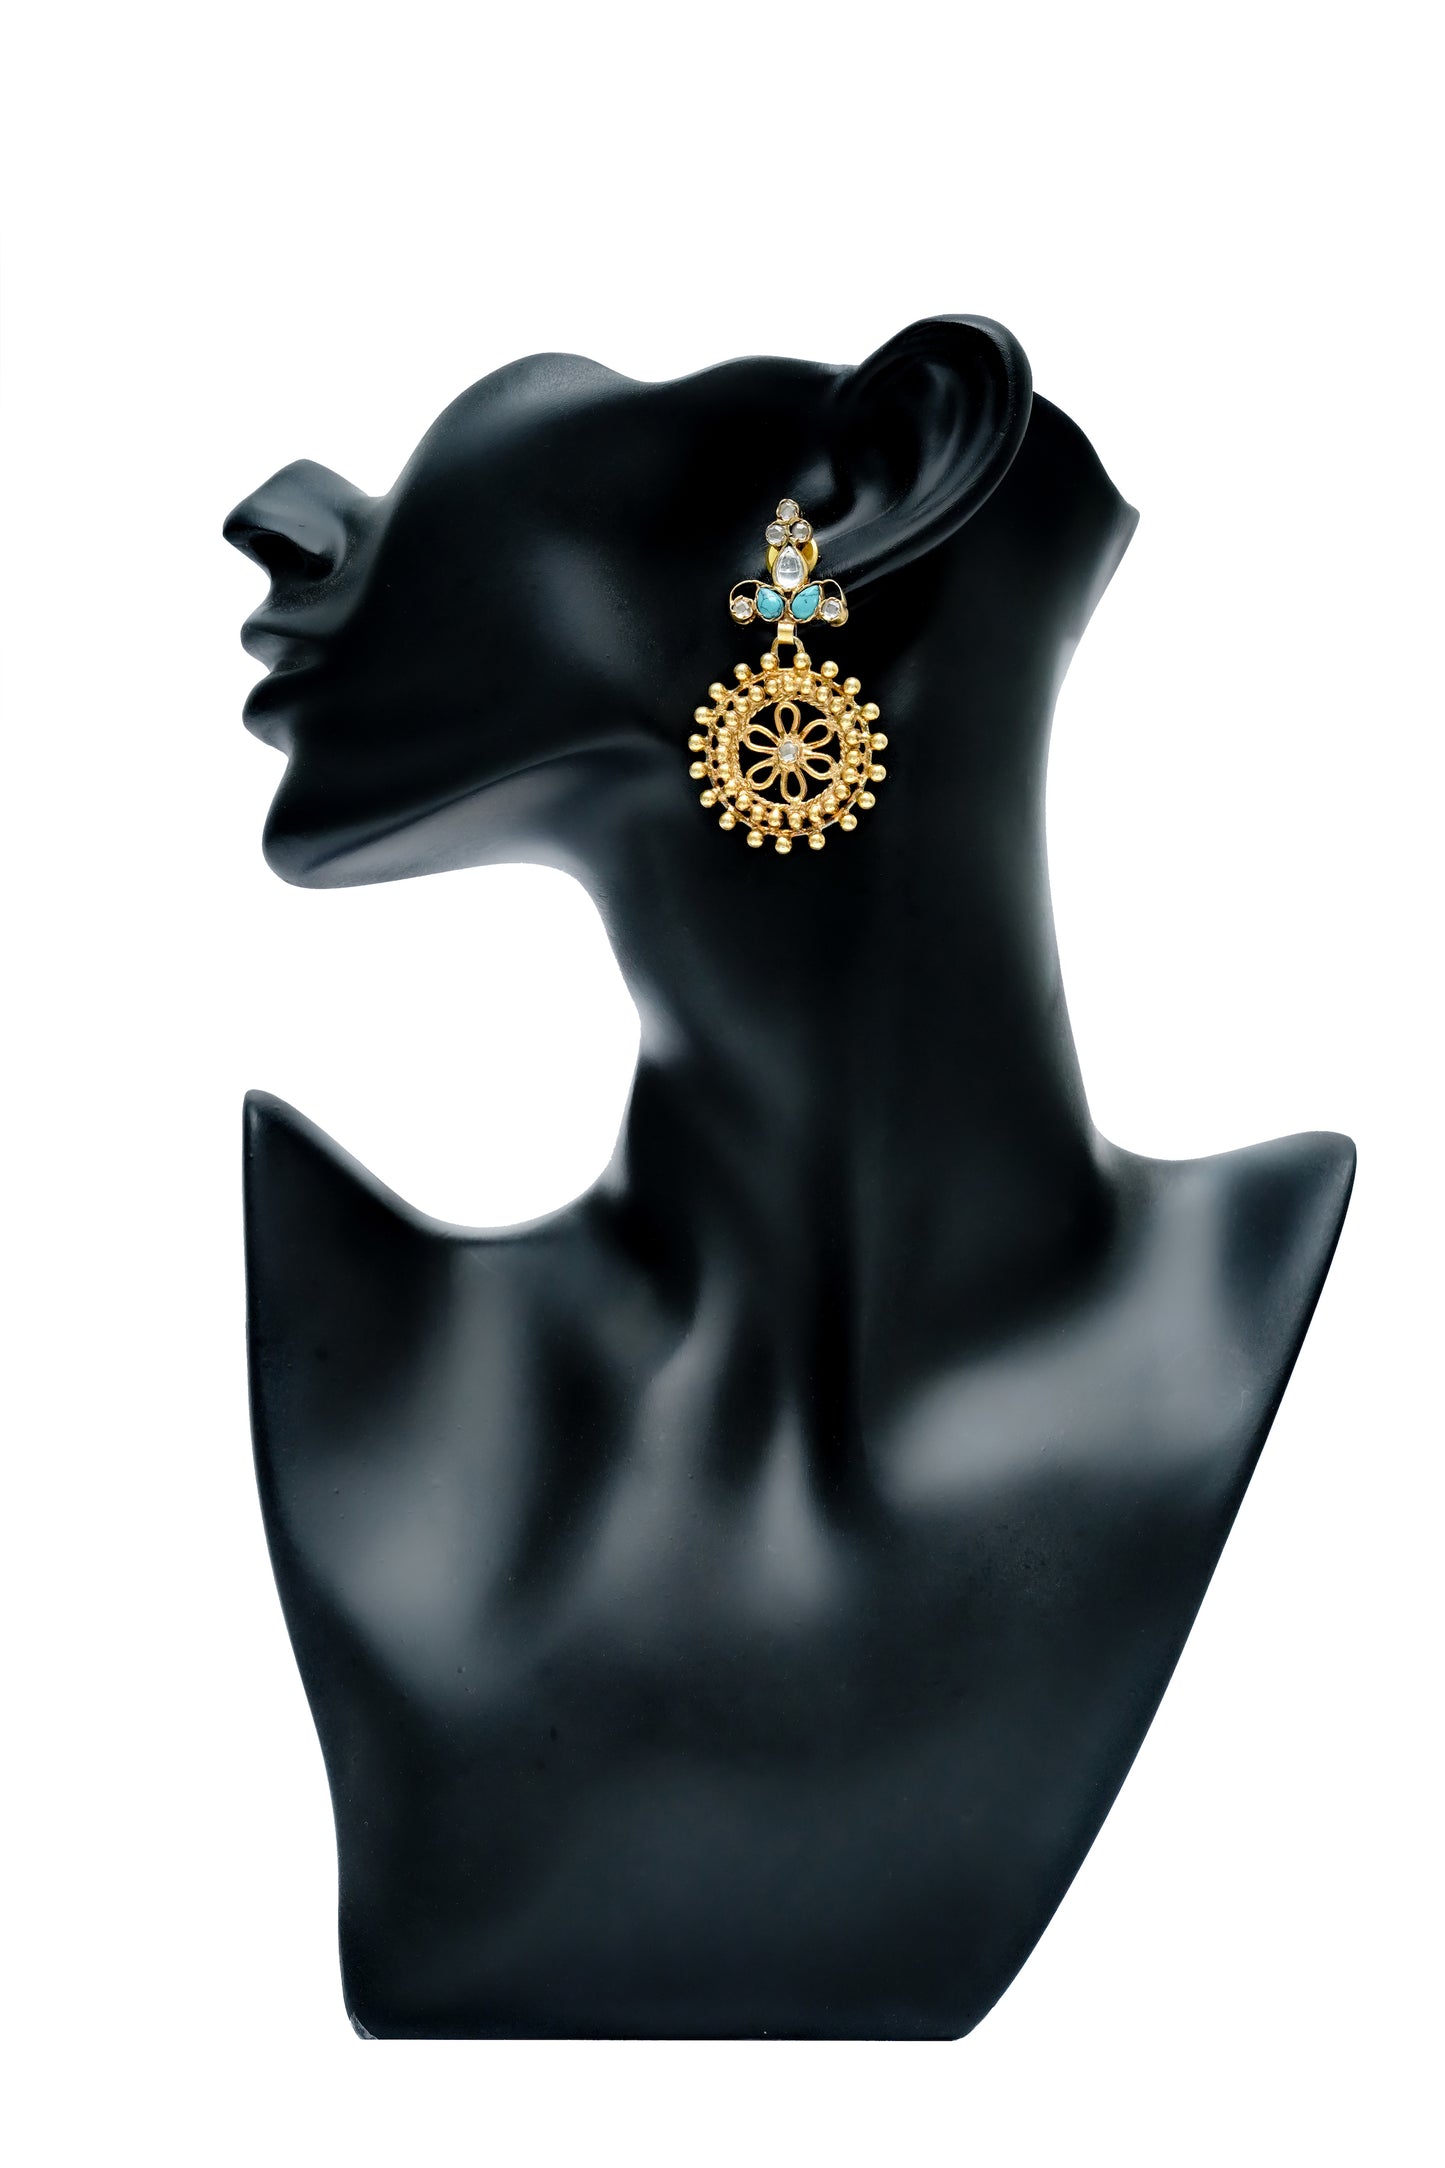 925 Silver Gold Plated Net Earrings with Turquoise - Neeta Boochra Jewellery